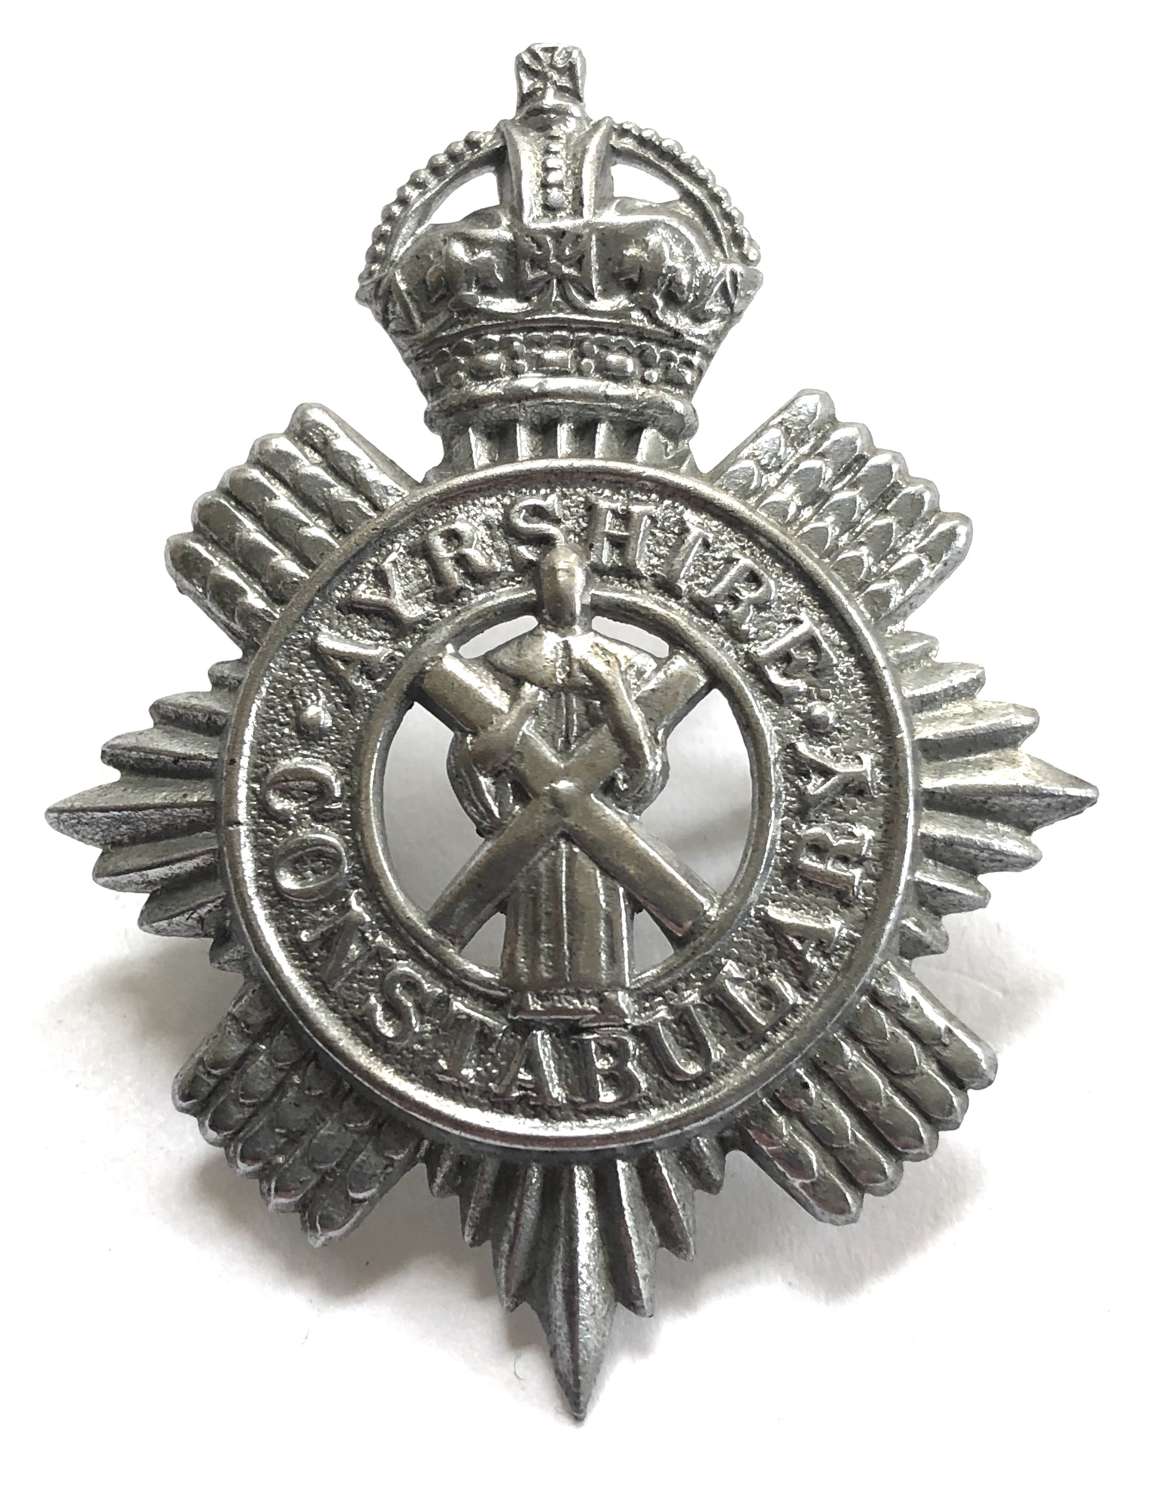 Ayrshire Constabulary pre 1953 cap badge.